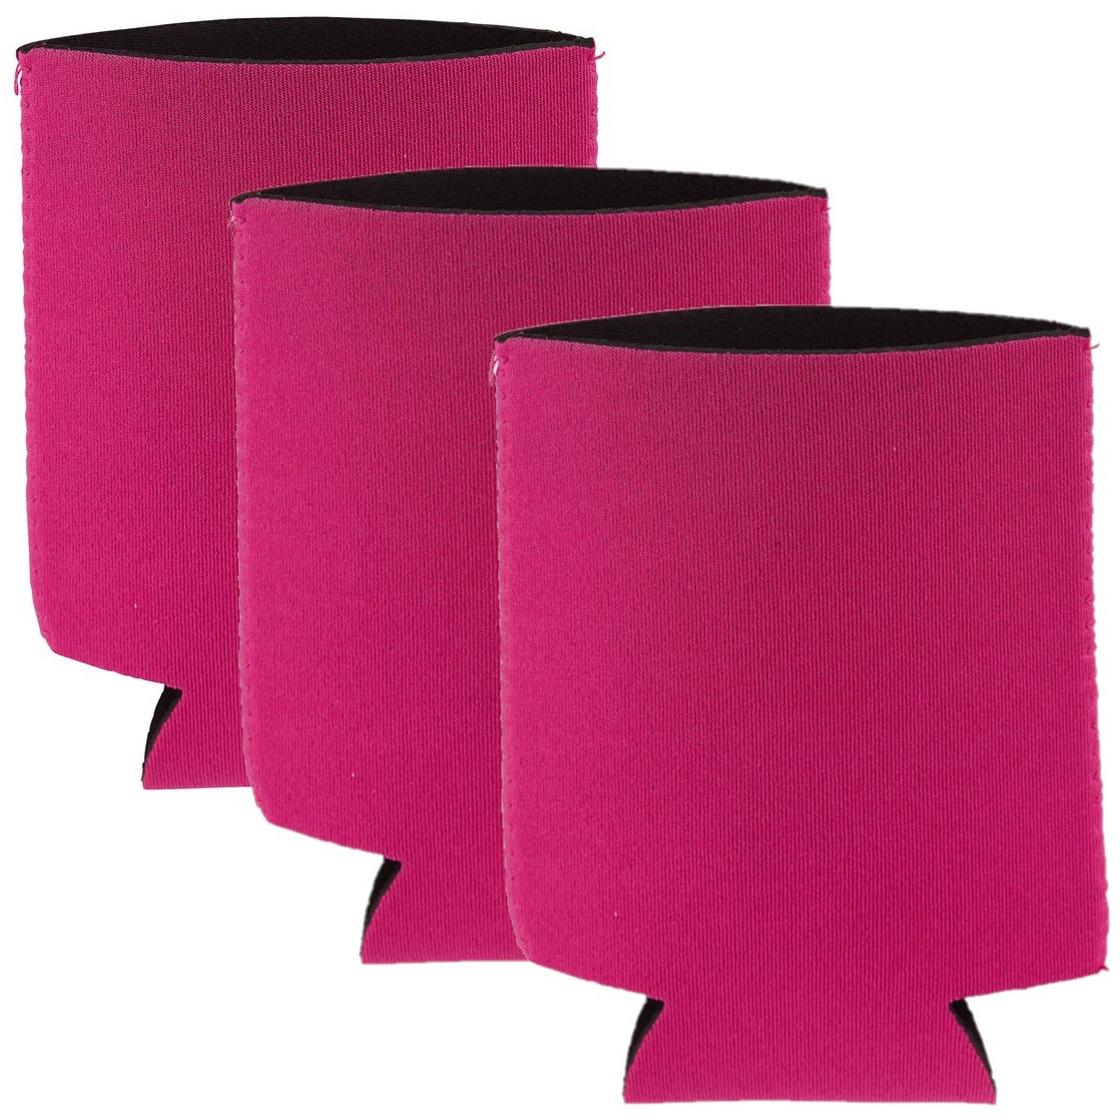 Voordeelset van 15x stuks opvouwbare blikjeskoelers- koel hoesjes fuchsia roze